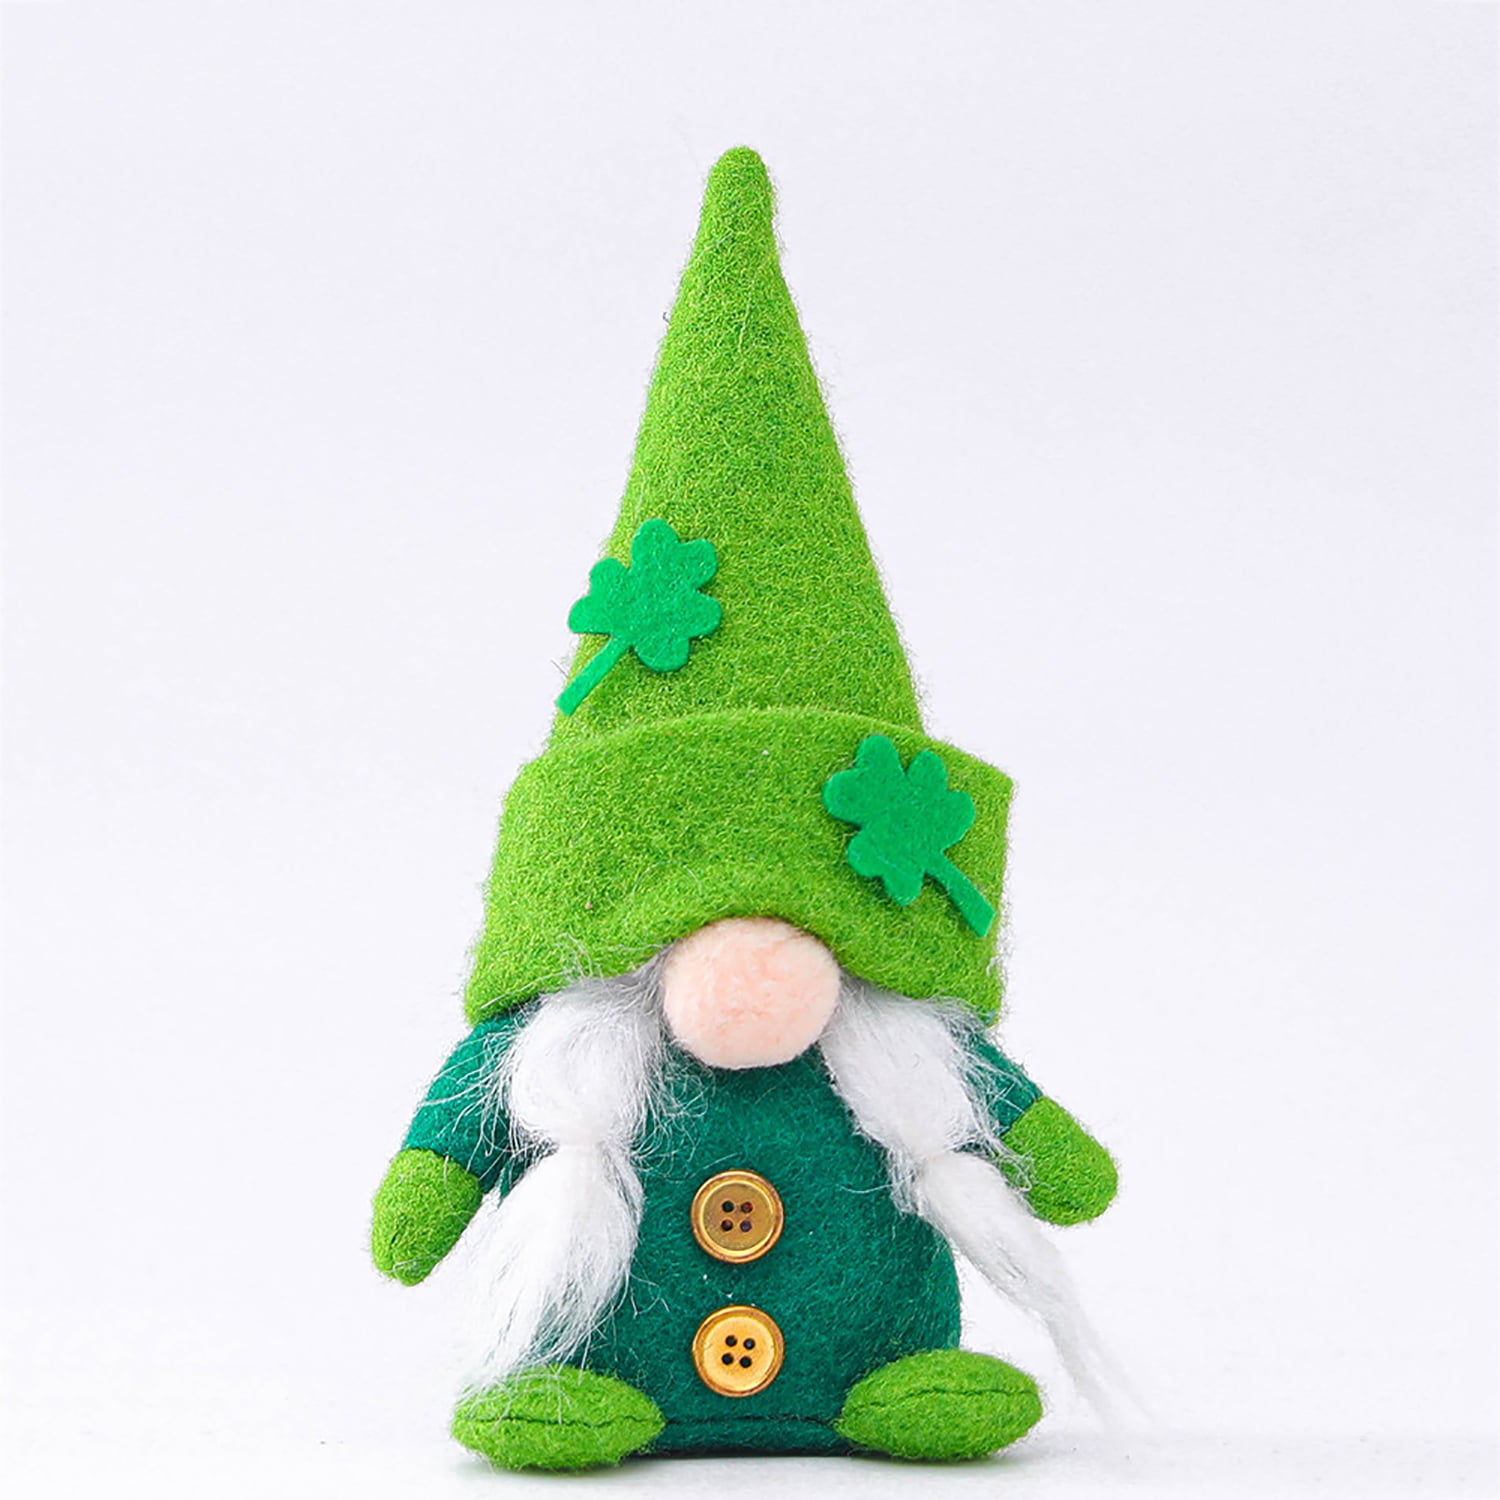 Details about   2pcs St Patrick's Day Leprechaun Gnome Plush Gnomes Home Holiday Decor 